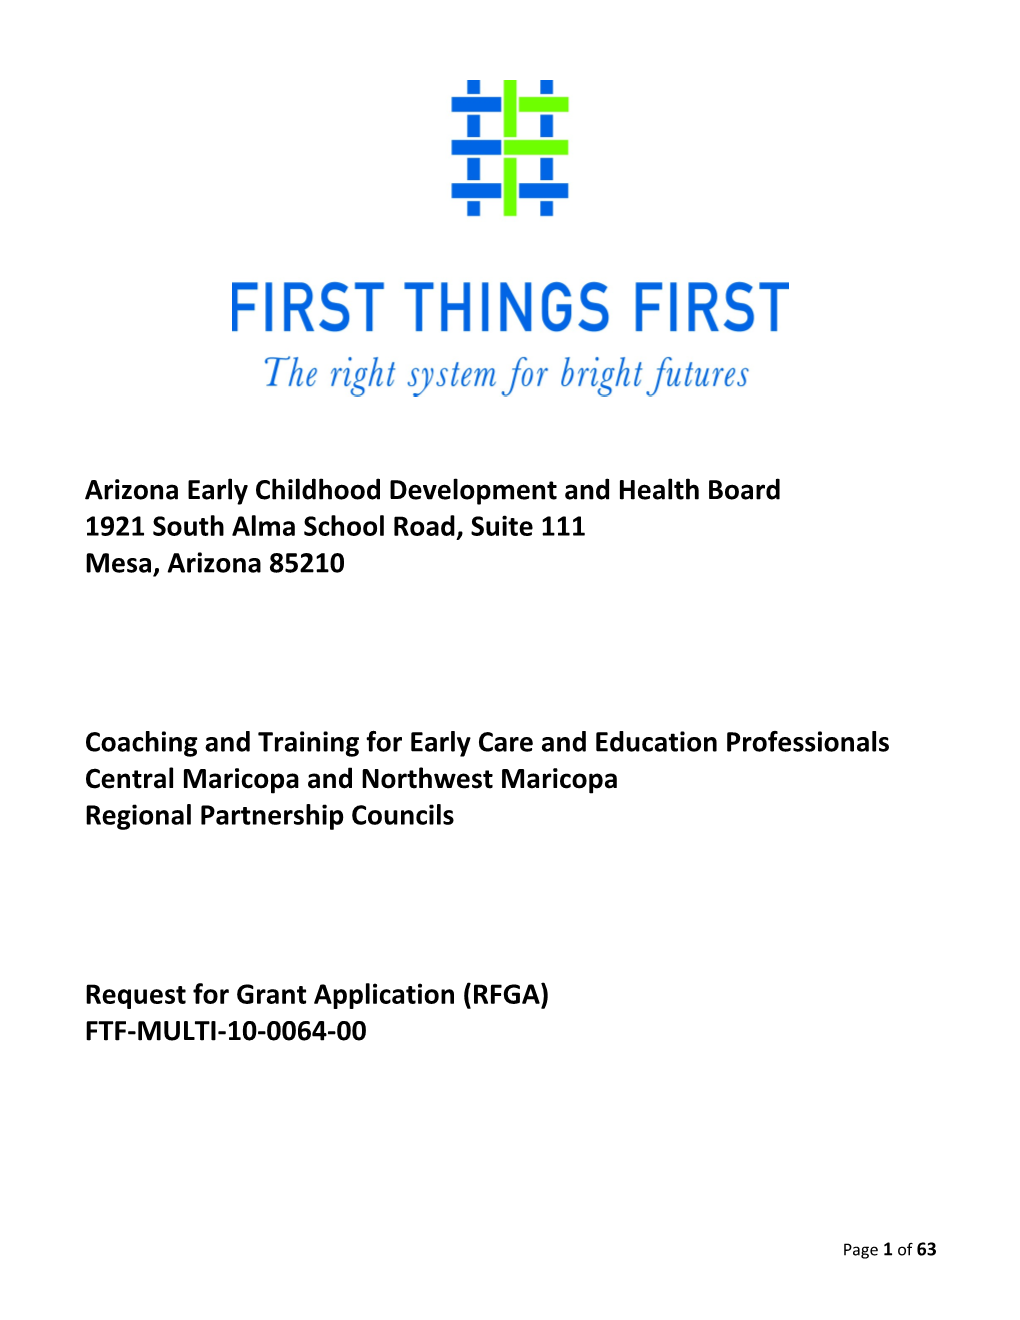 Arizona Early Childhood Development and Health Board s1